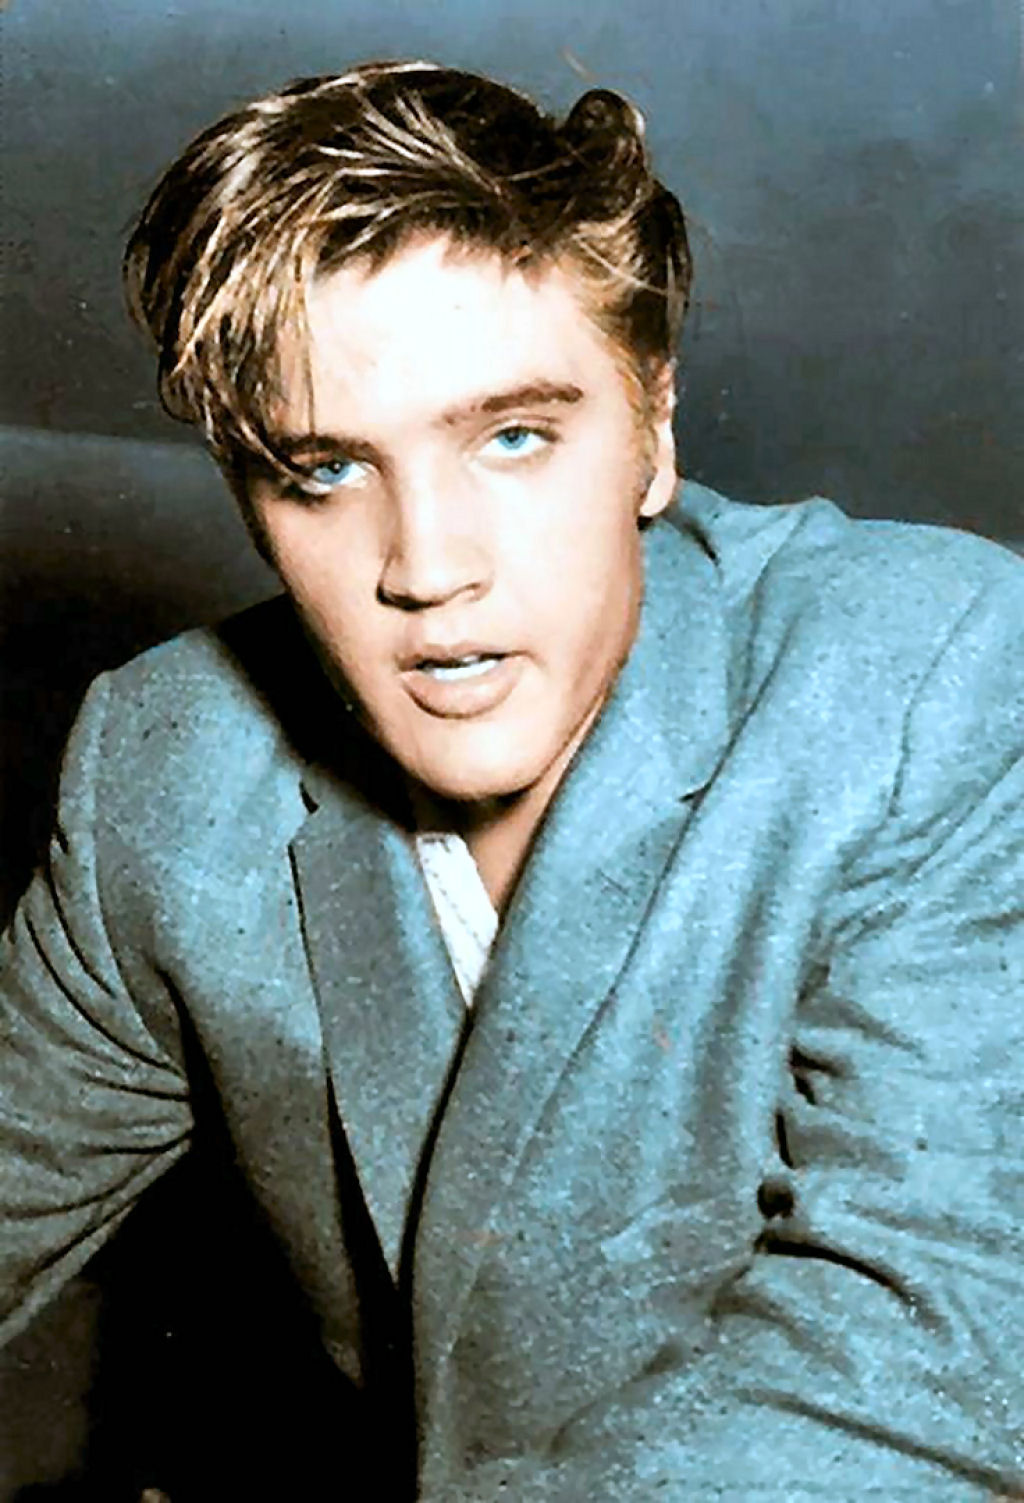 Fotos antigas de Elvis Presley mostram que ele era realmente loiro 10